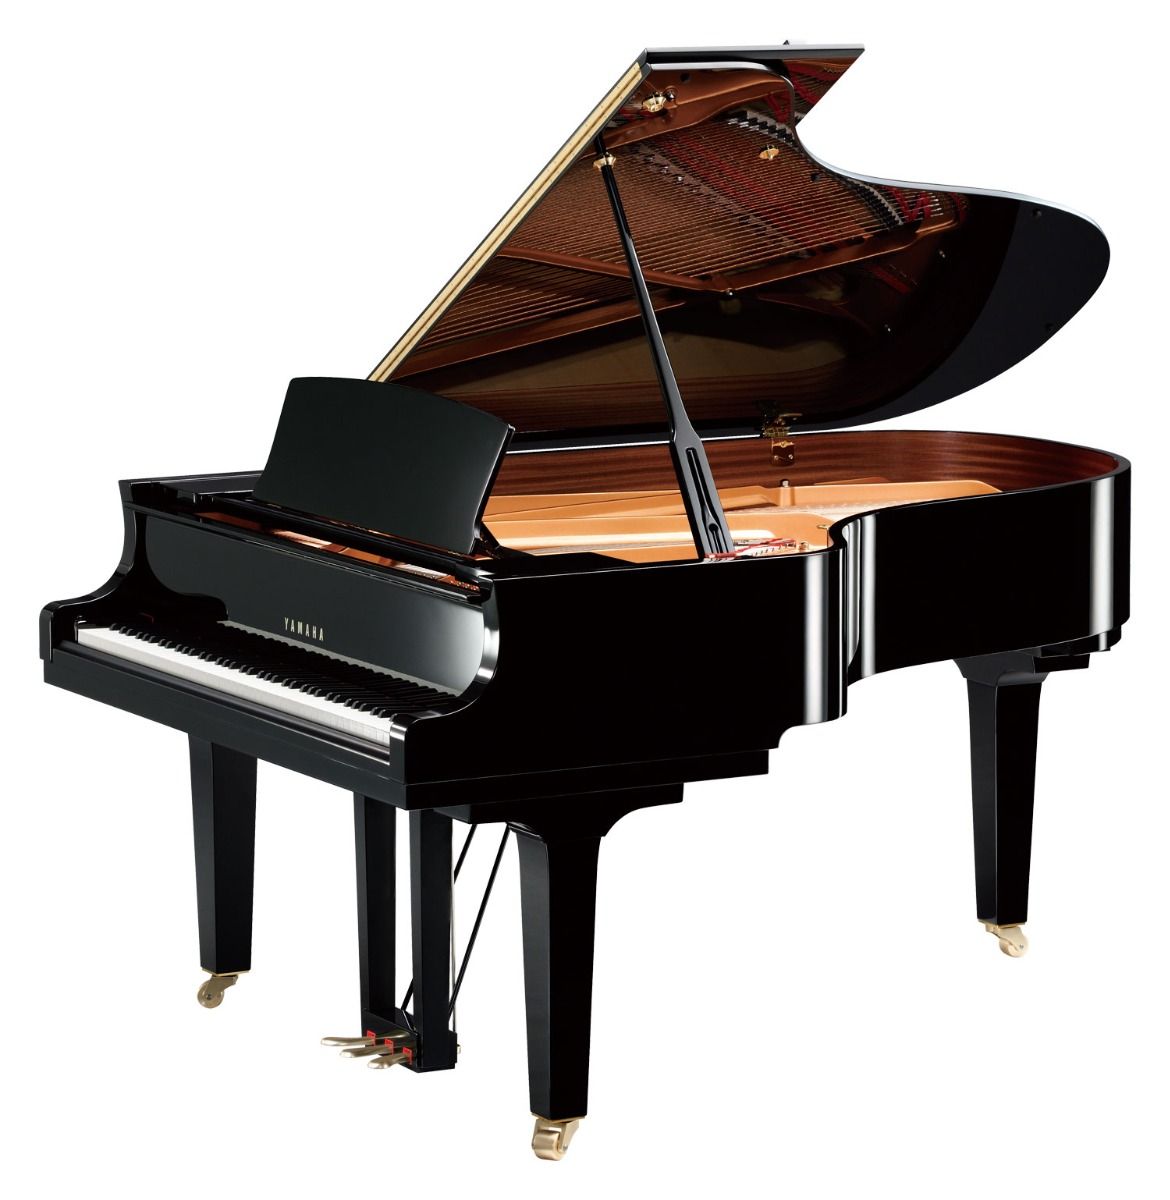 Yamaha C5X 6'7" Grand Piano in Polished Ebony